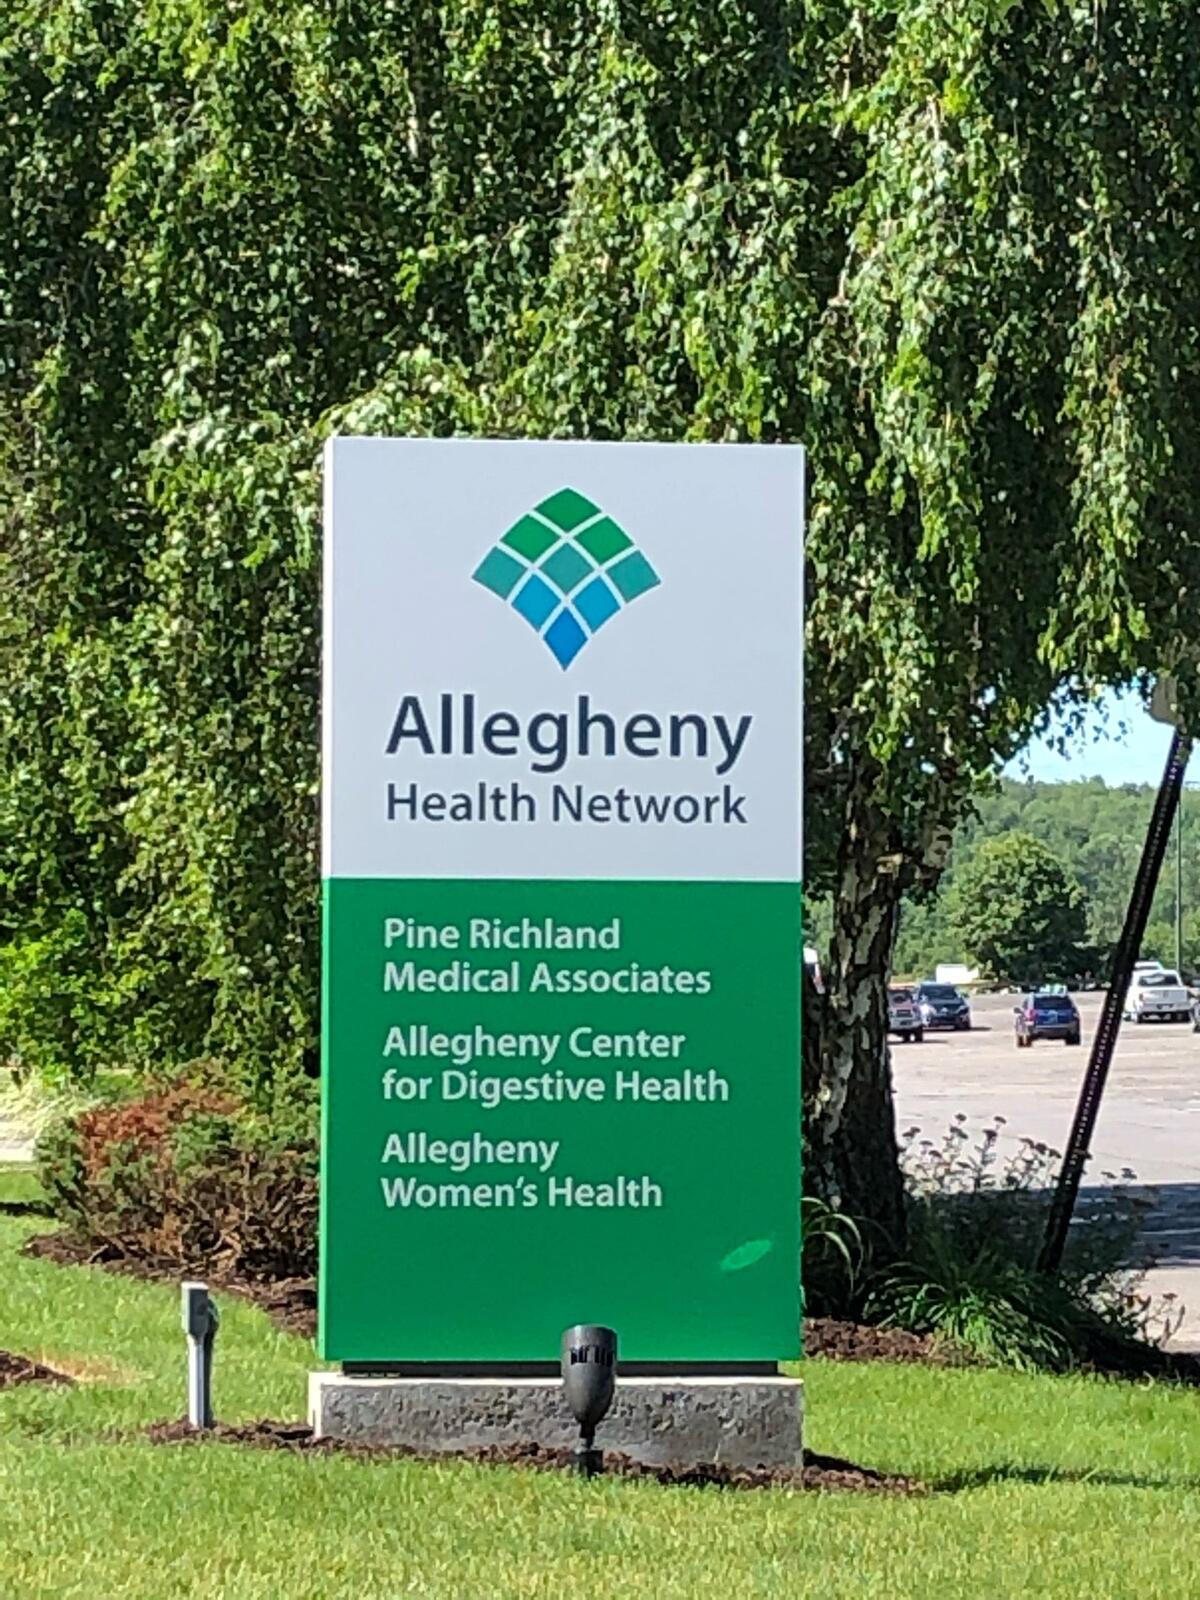 Pine Richland Medical Associates